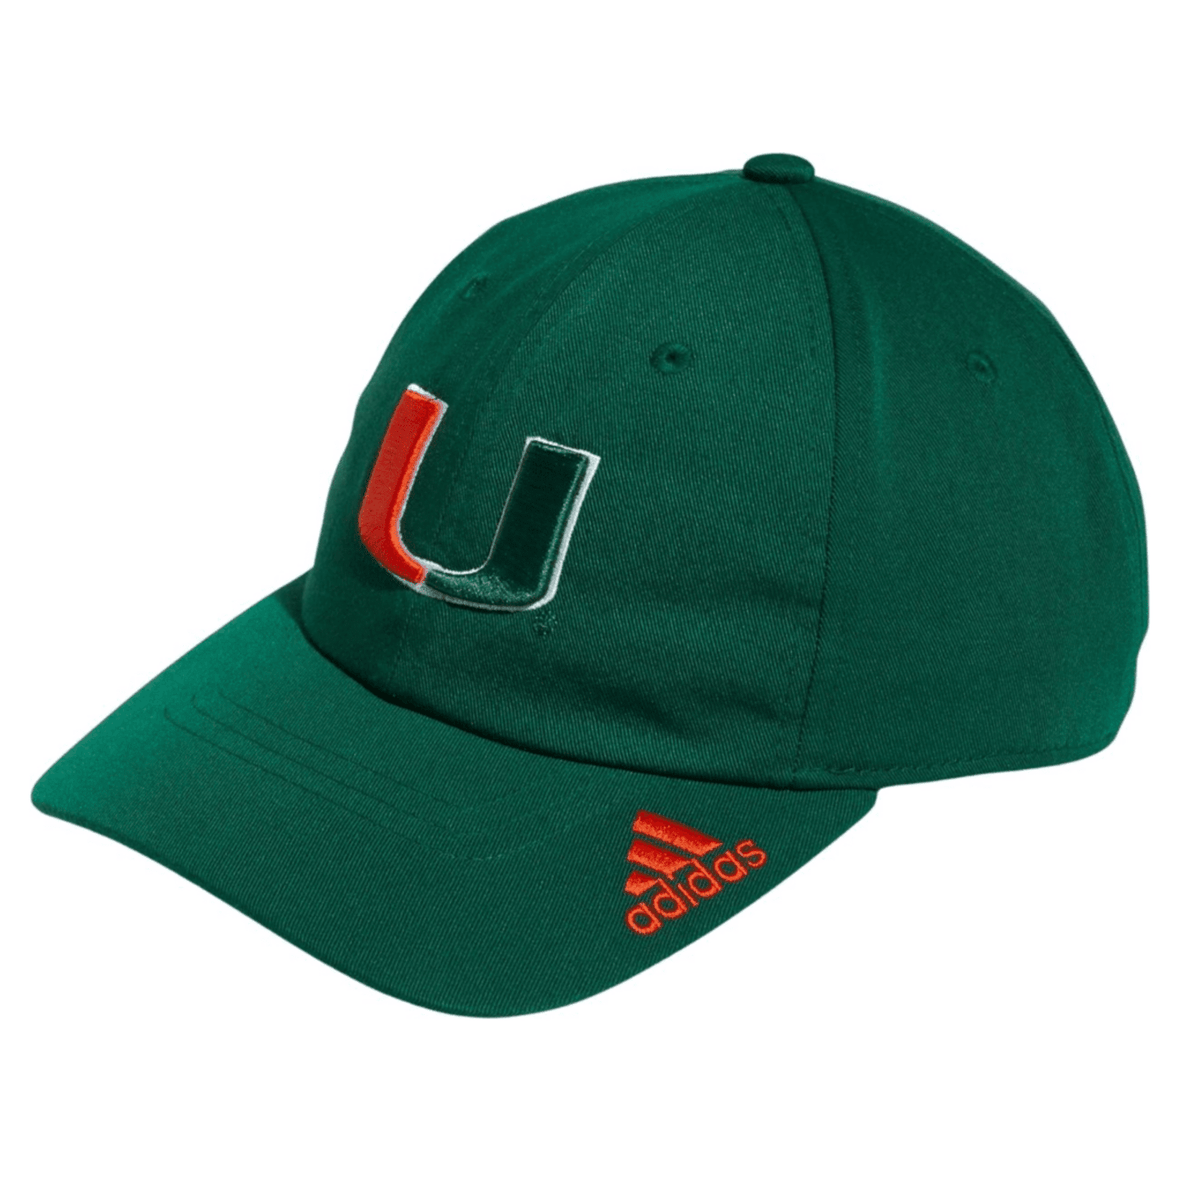 Adidas University of Miami Adjustable Slouch Green Cap